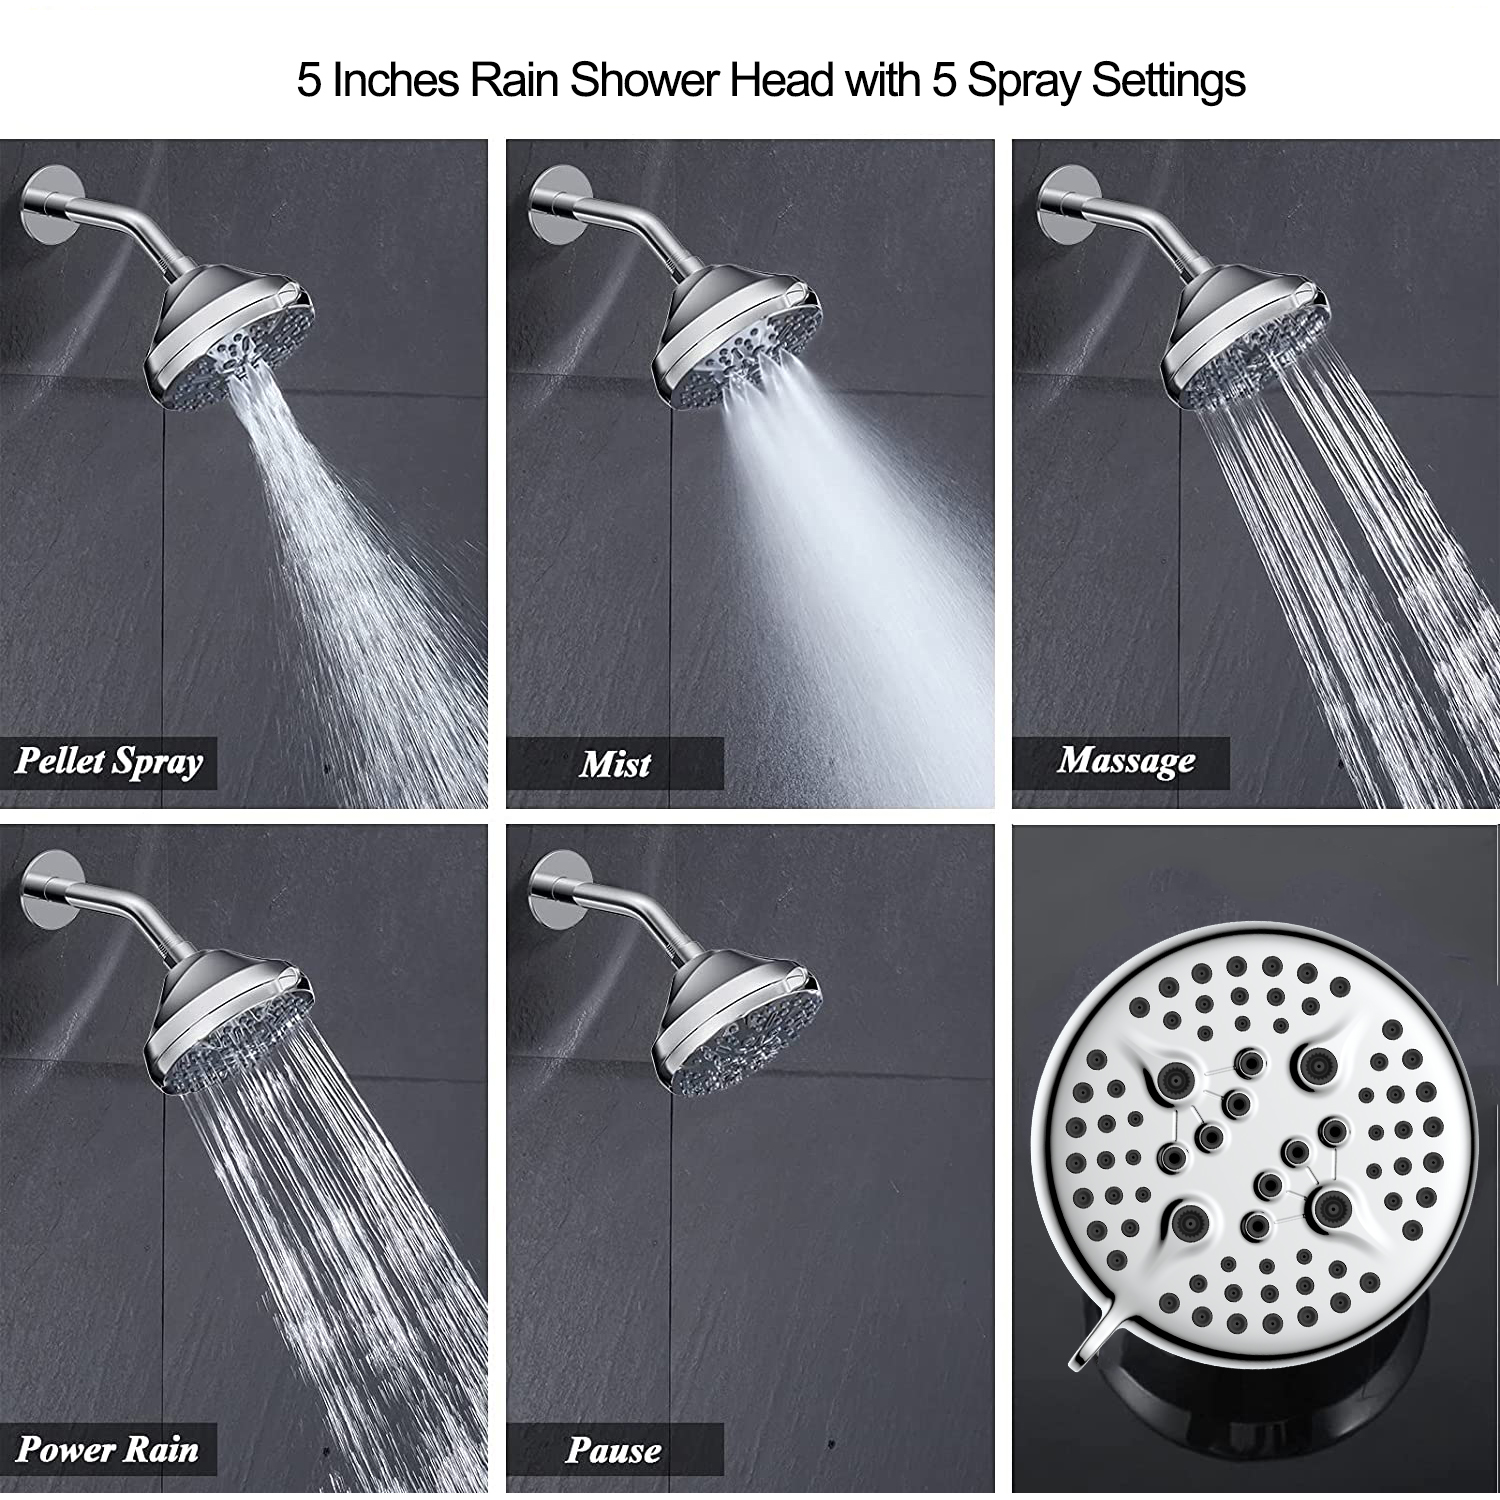 High Pressure Fixed 5 Inches 5 Spray Settings Rain Shower Head